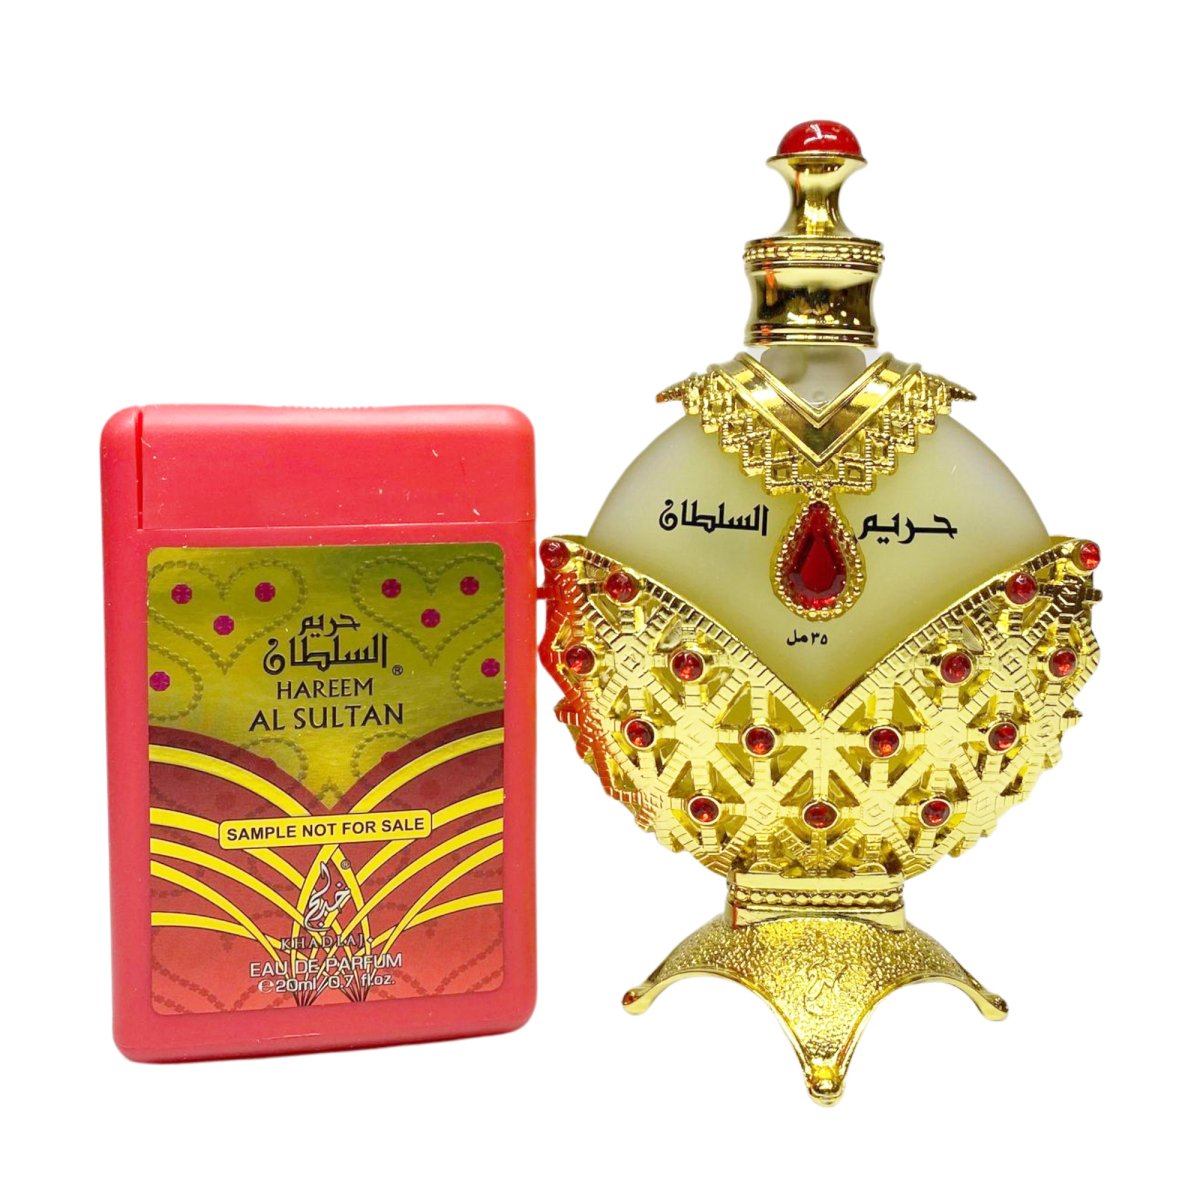 HAREEM AL SULTAN (ORIGINAL) GOLD - Khadlaj - Fragrance